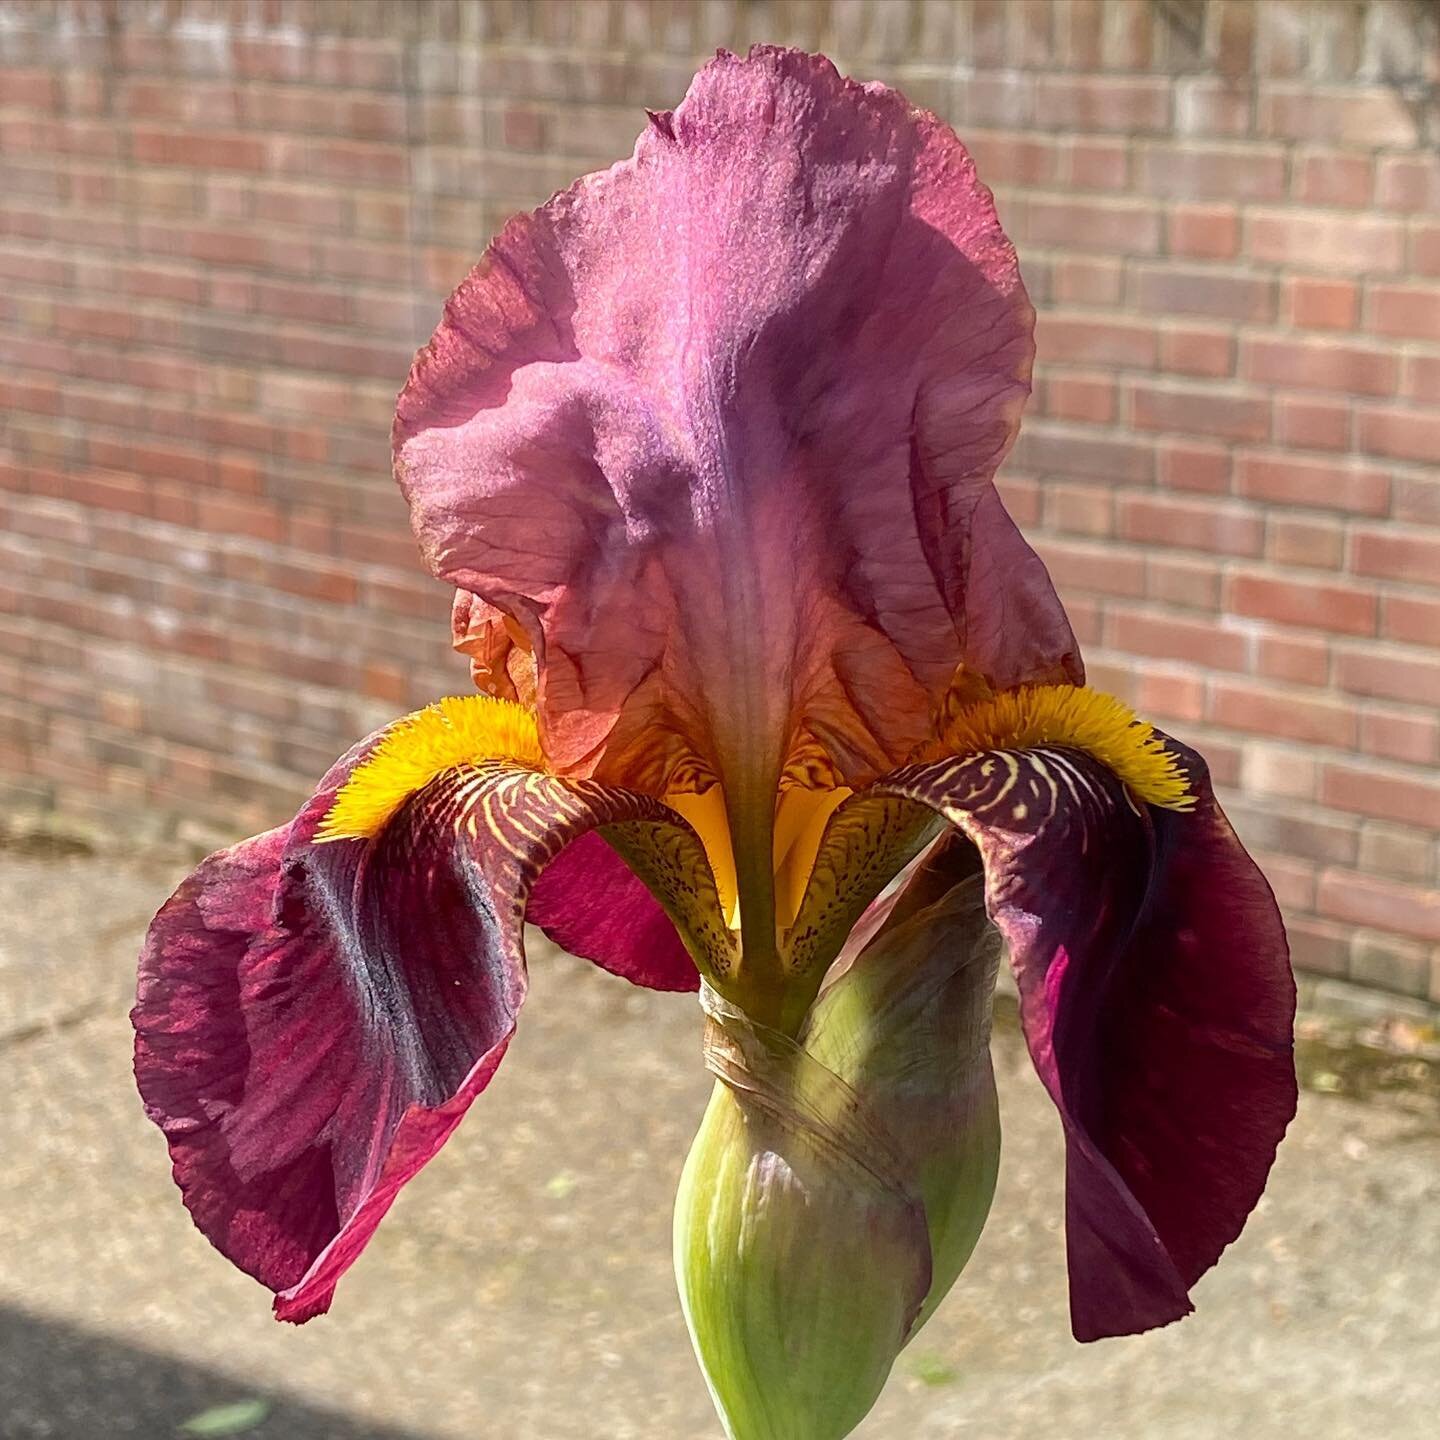 Irises in local gardens

#irises #harlesden #northwestlondon #kensalrise #springflowers #frontgardens #petals #colour #abstractflower #fleurdelis